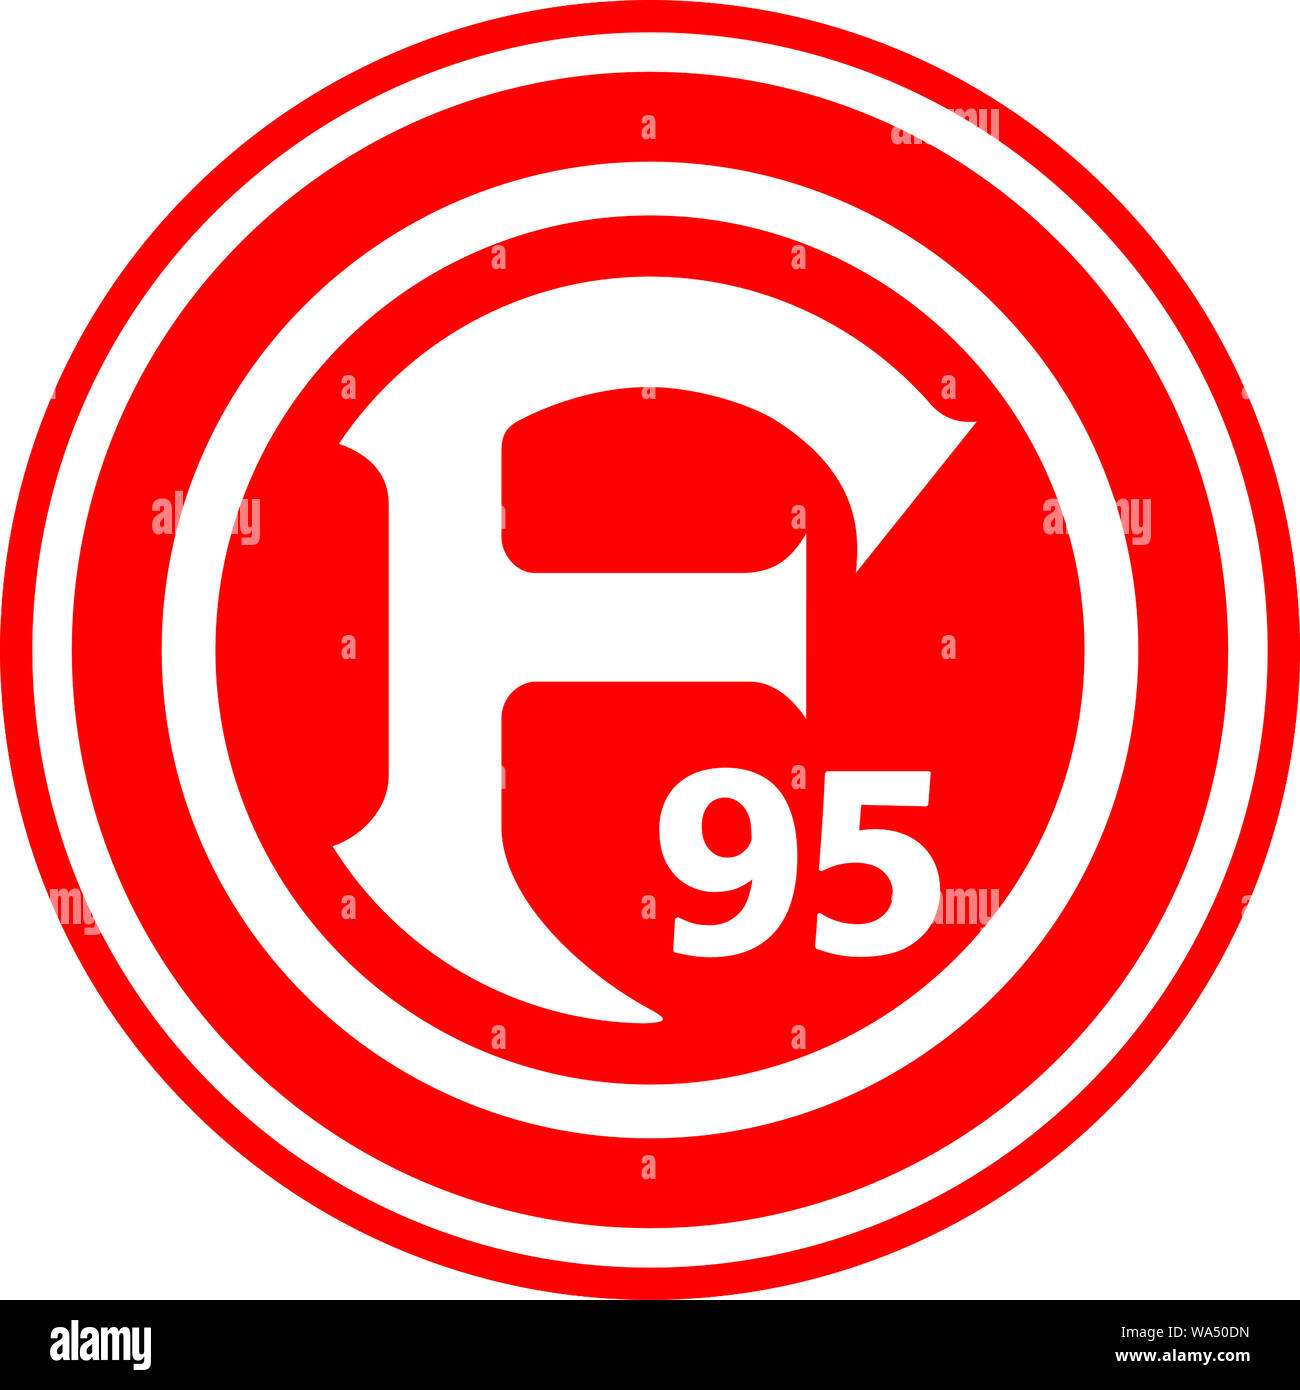 Logo of German football team Fortuna Dusseldorf - Germany Stock Photo -  Alamy